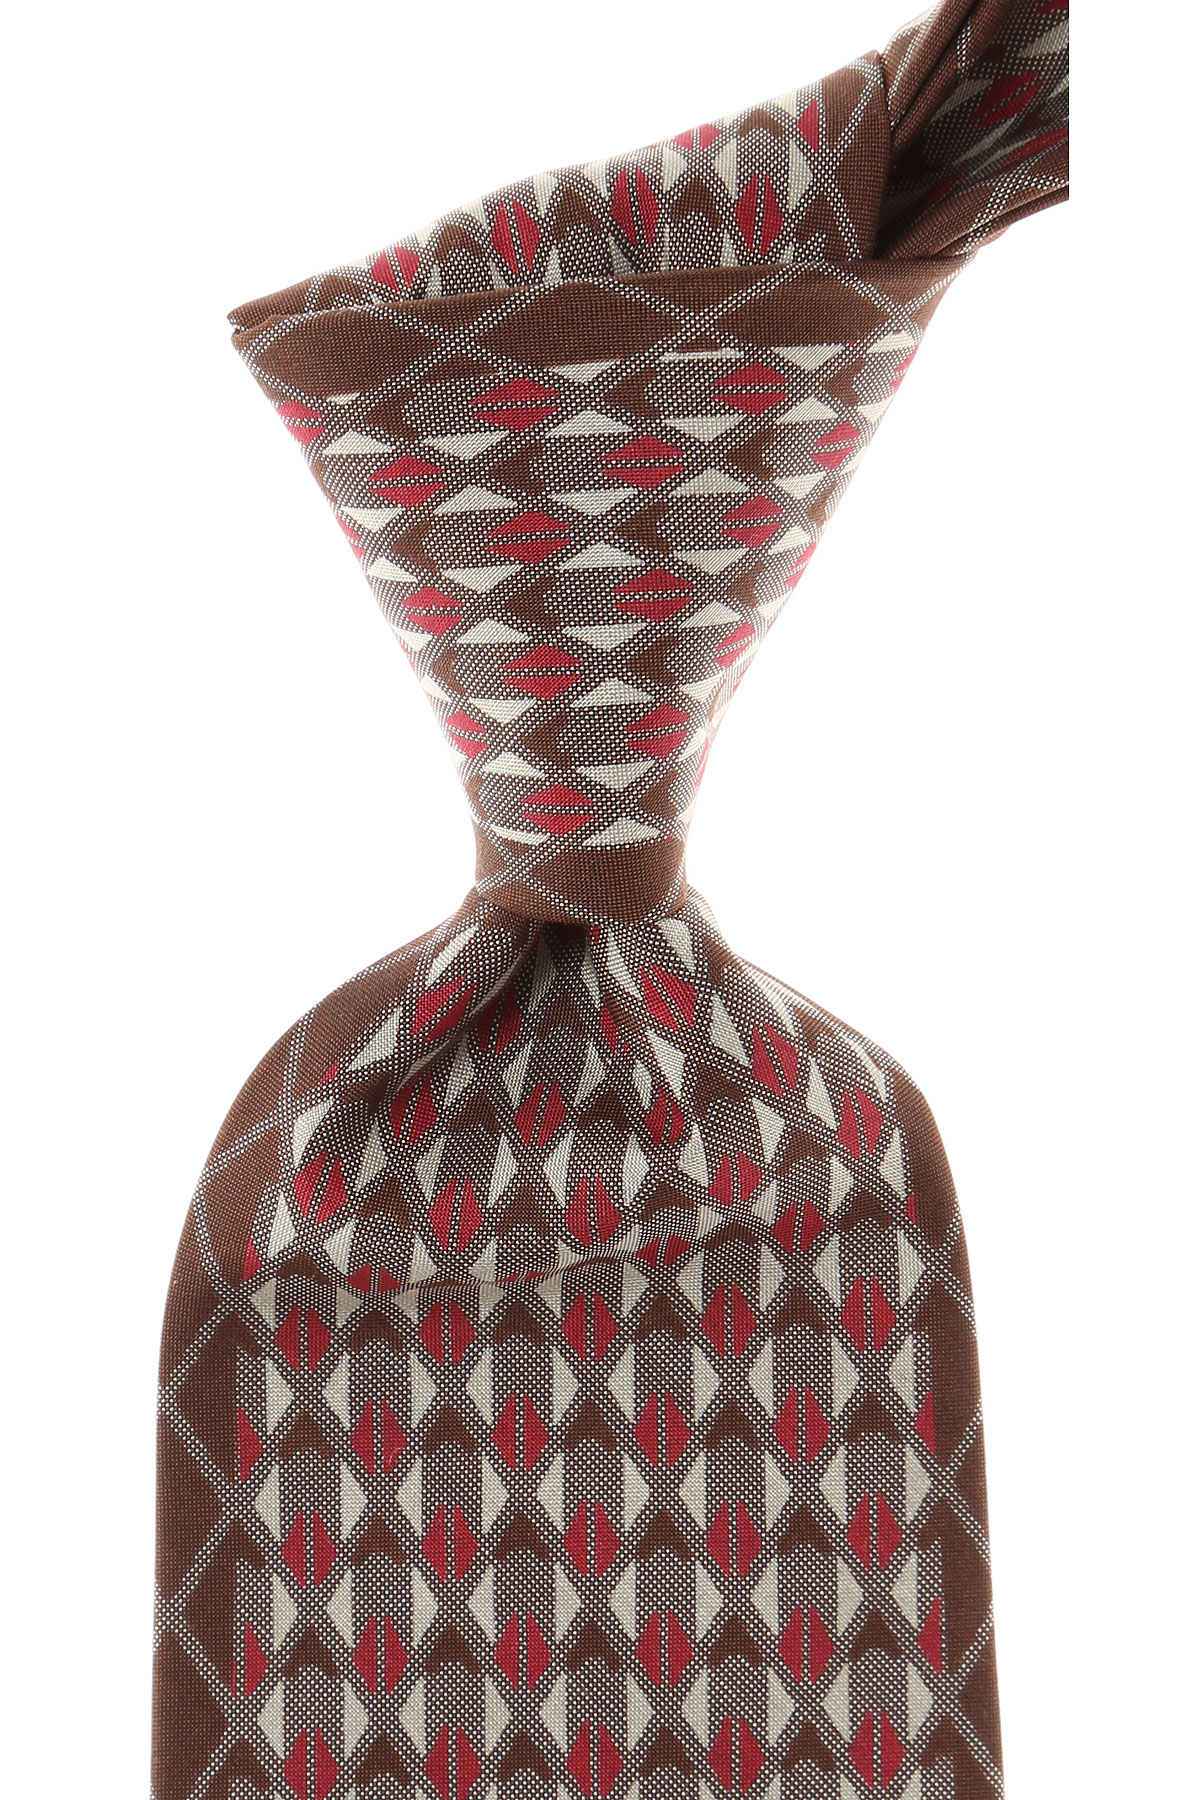 Cravates Mila Schon , Brun chocolat, Soie, 2017